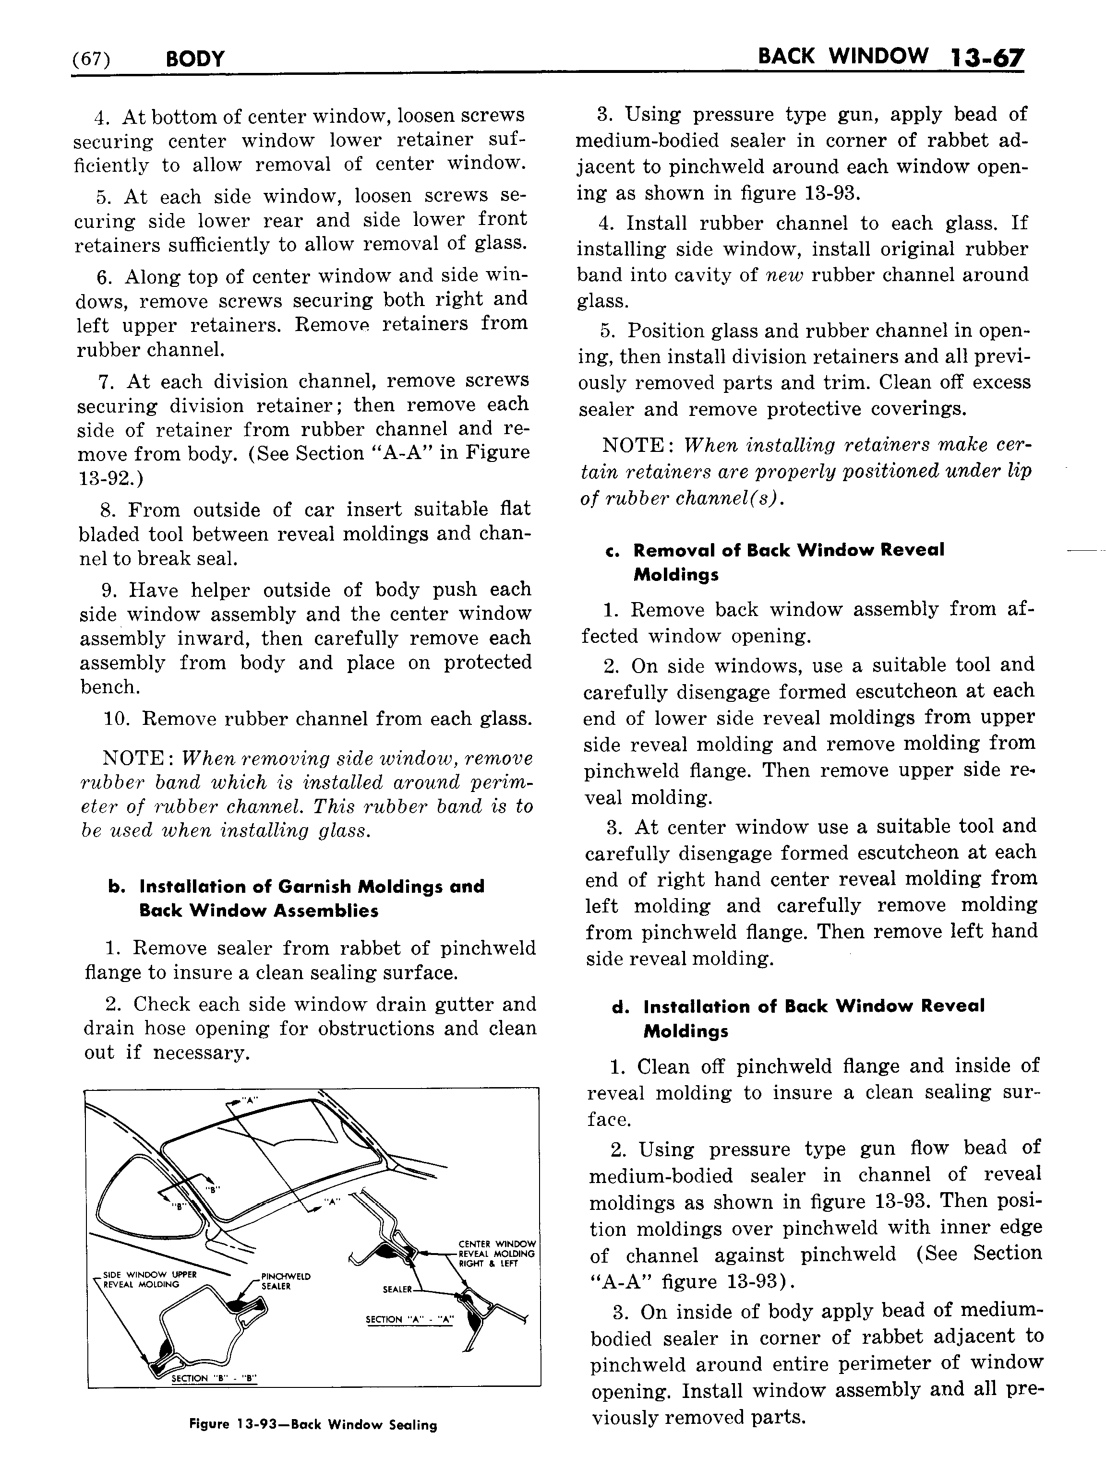 n_1957 Buick Body Service Manual-069-069.jpg